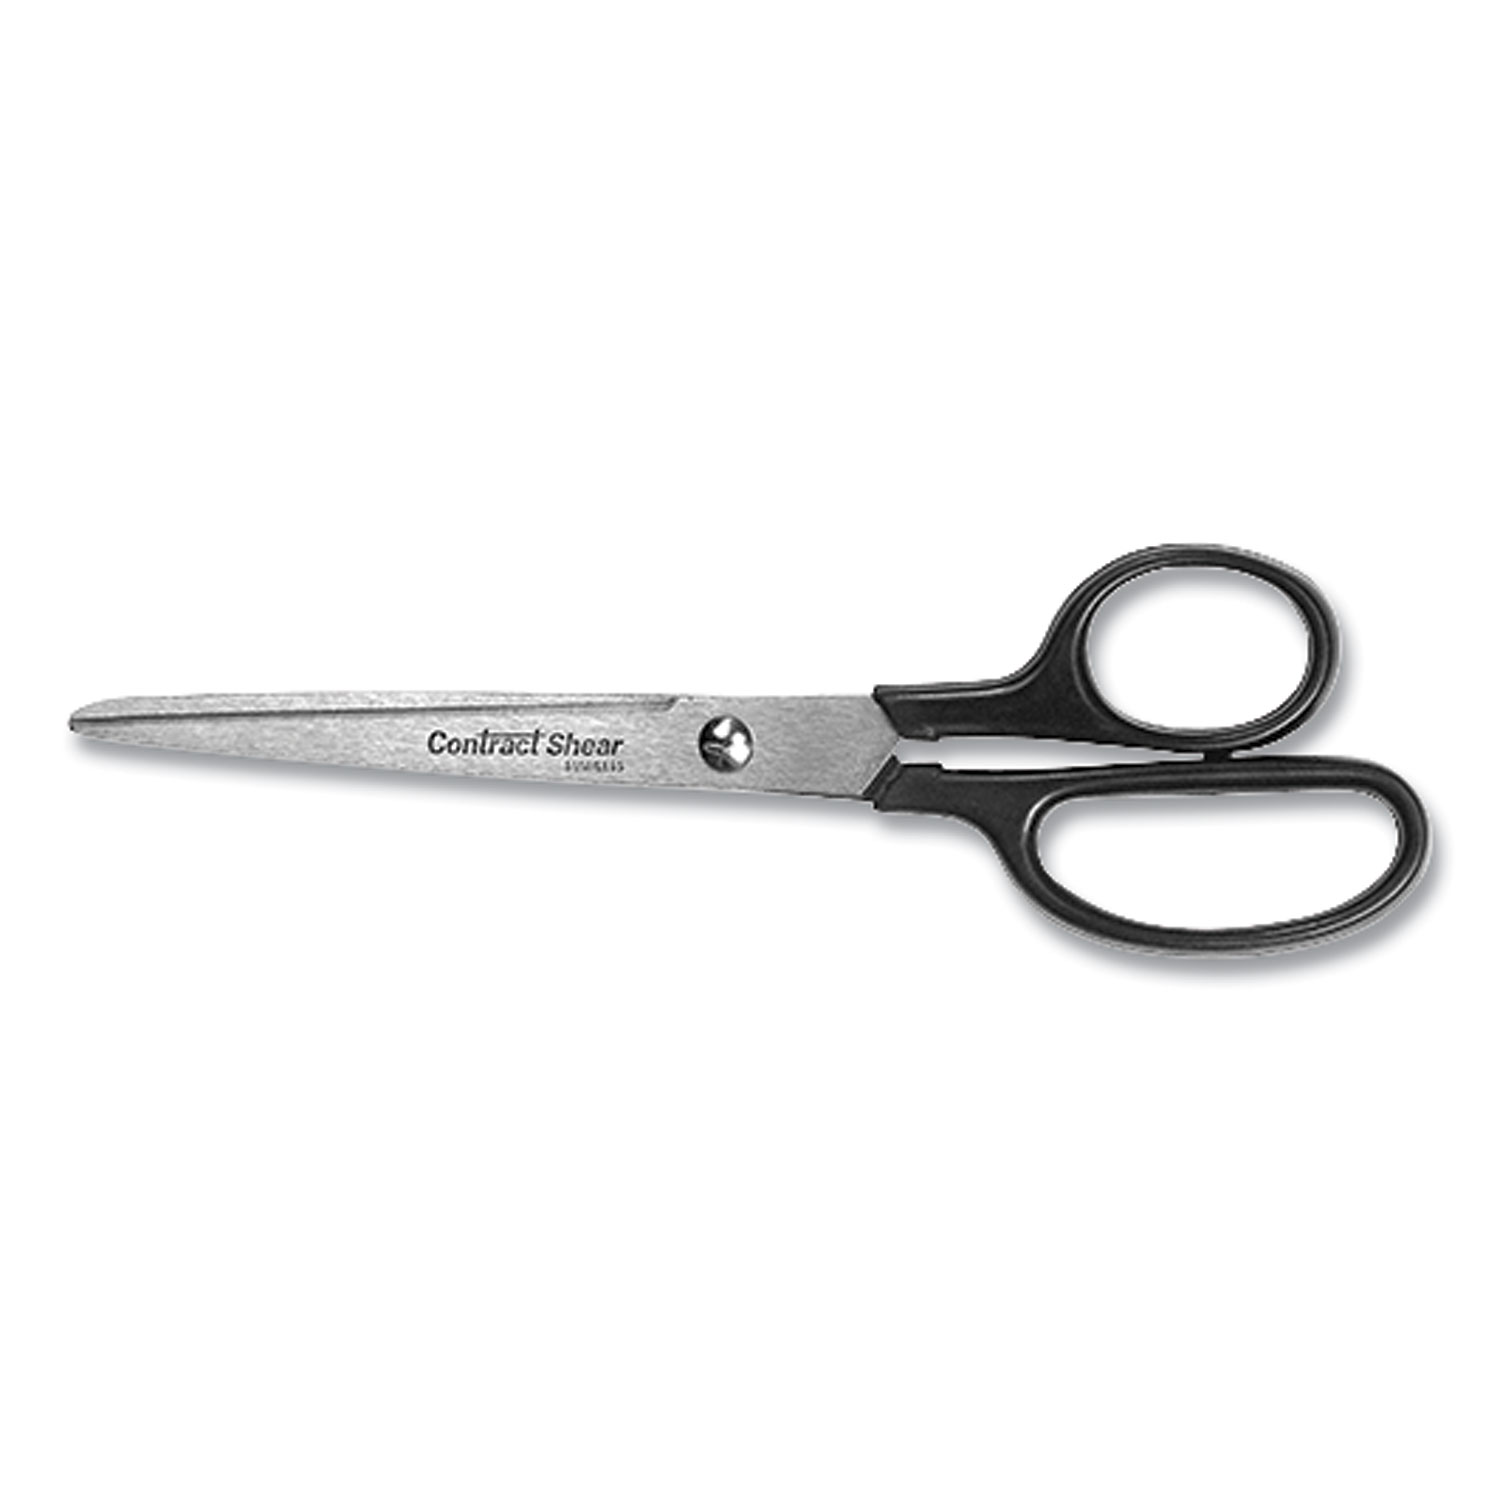  Westcott 10571/10575 Contract Stainless Steel Standard Scissors, 7 Long, 3.13 Cut Length, Black Straight Handle (WTC505255) 